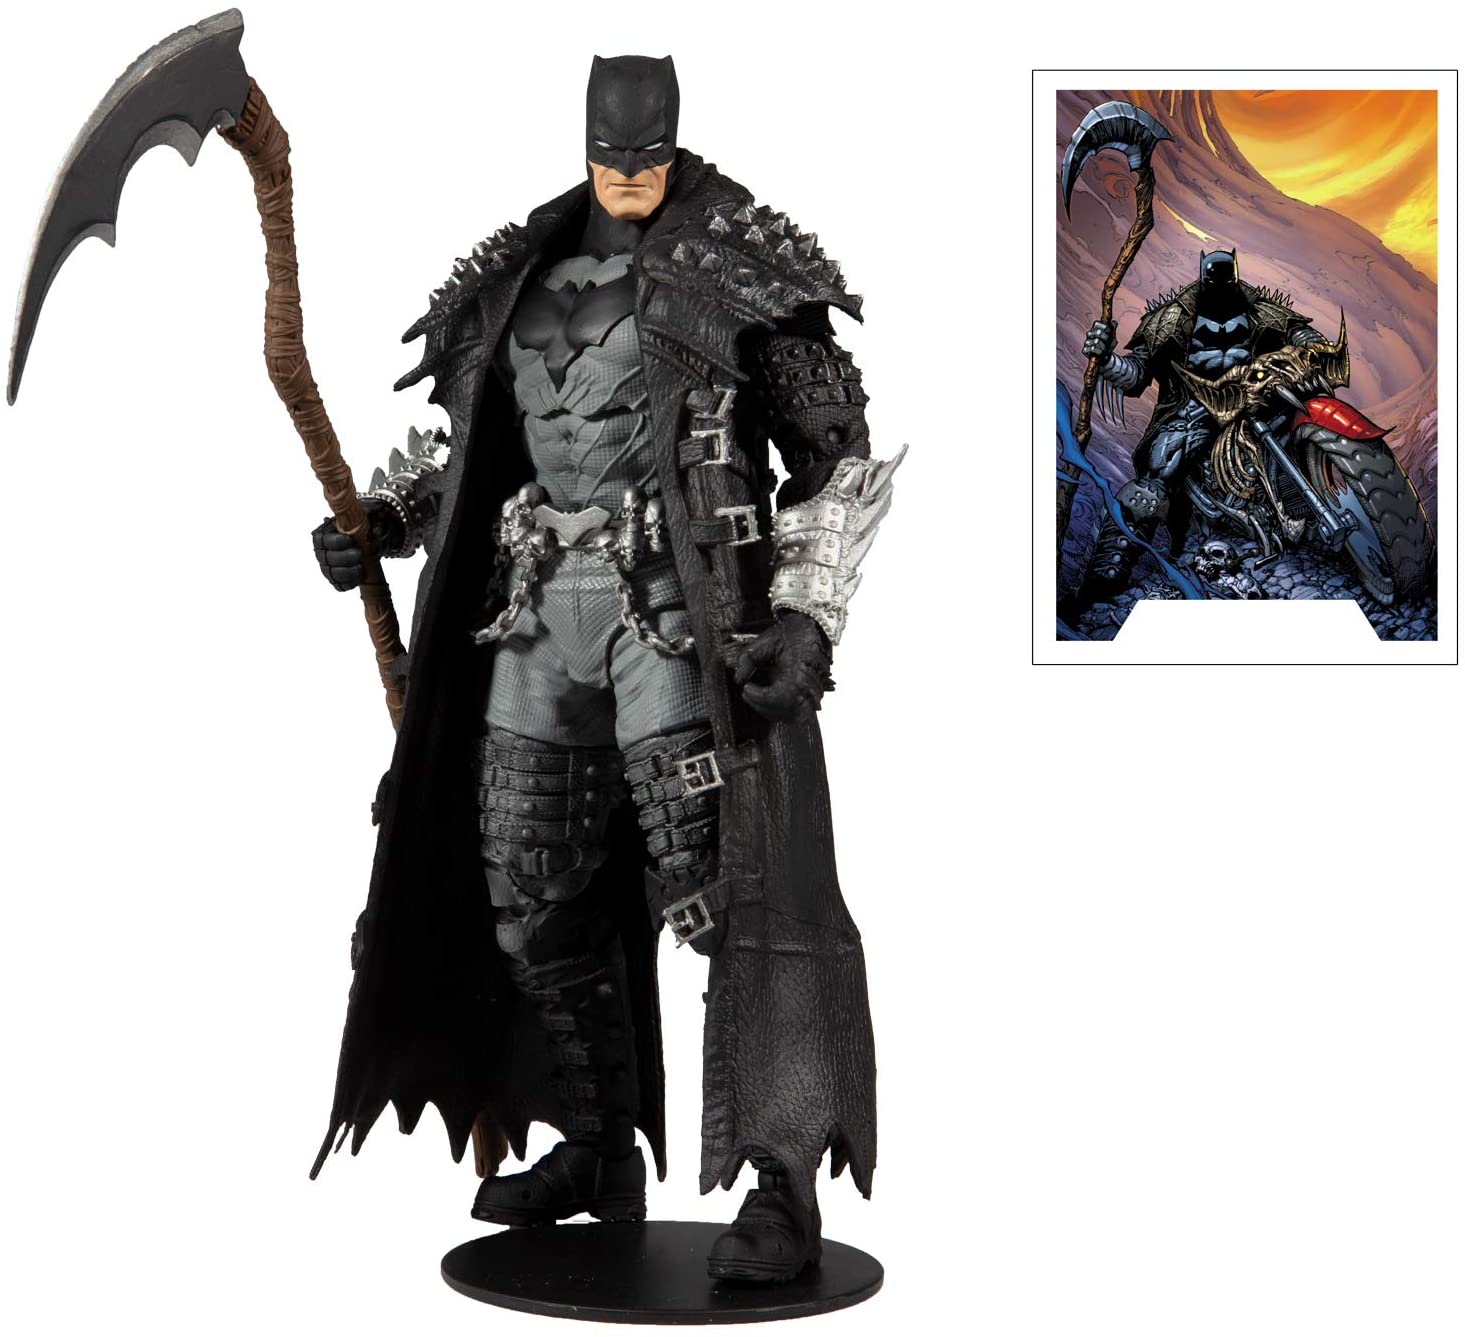 McFarlane DC Multiverse 7" Batman Death Metal Action Figure $11.99 & More + Free Curbside Pickup @ Best Buy